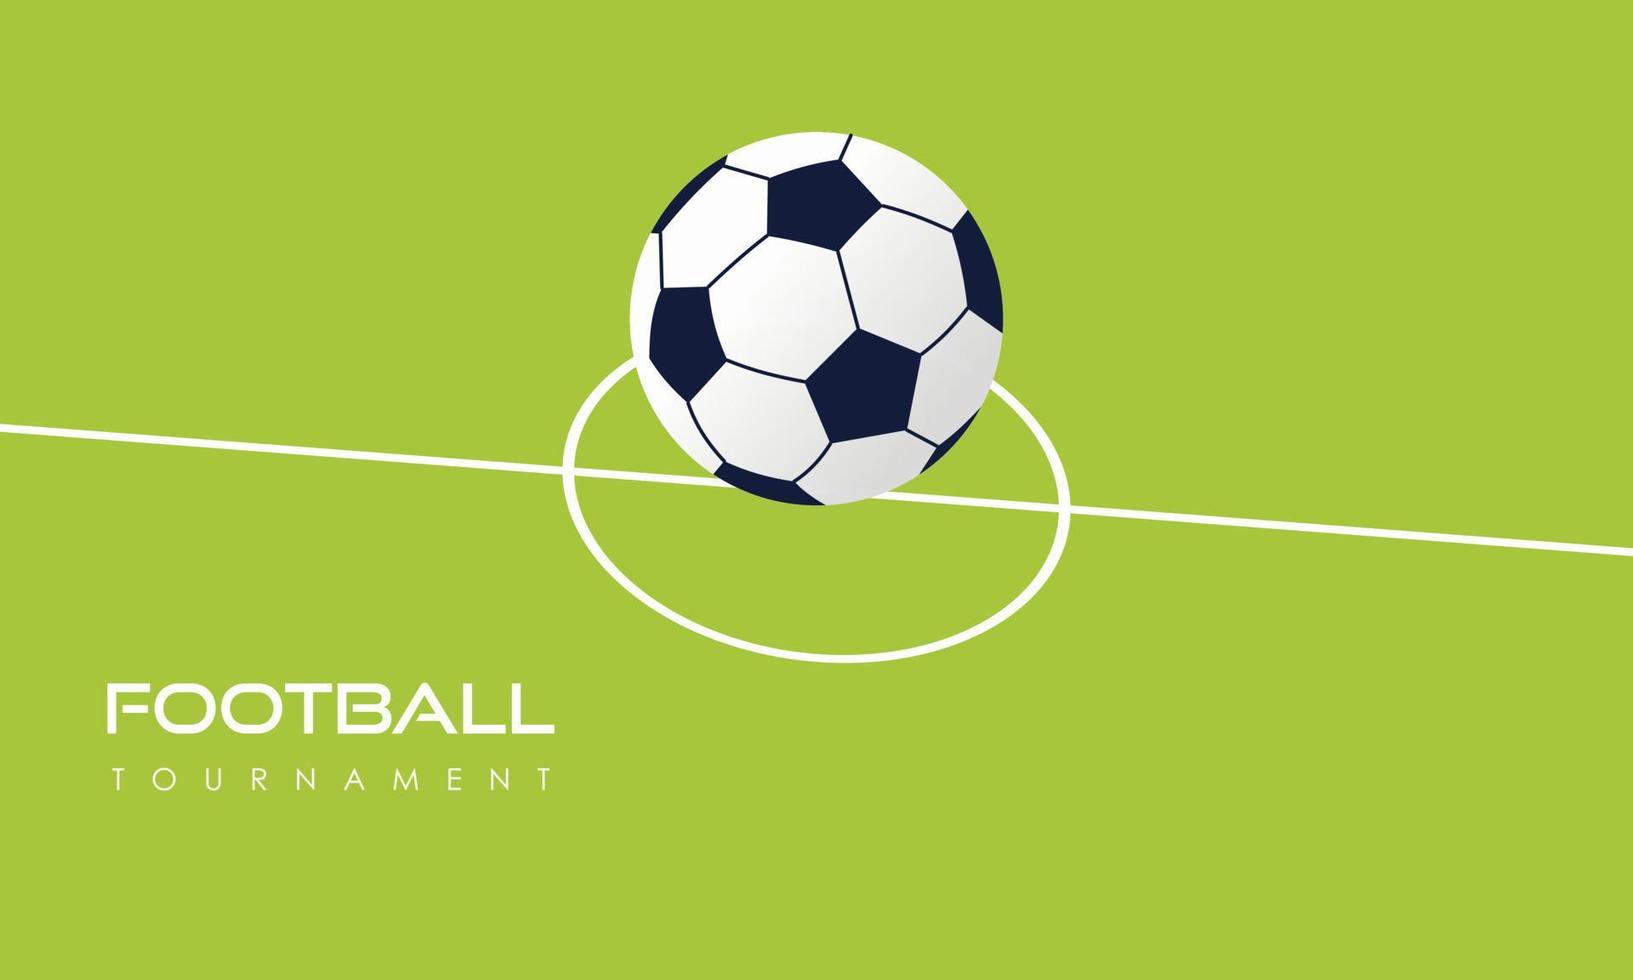 Football tournament illustration vector